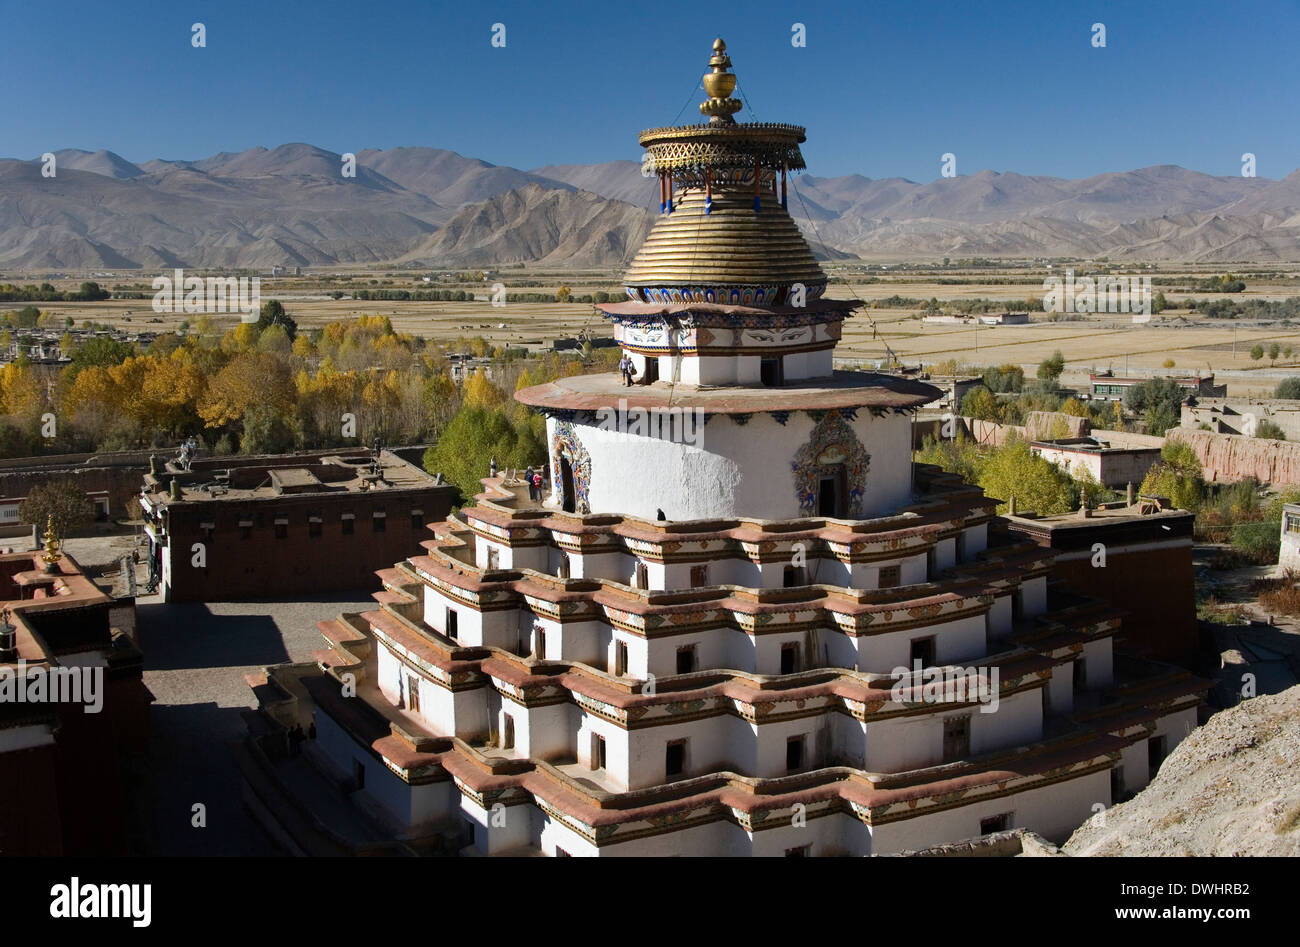 The Kumbum Stupa at Gyantse in the Tibet Autonomous Region of China. Stock Photo